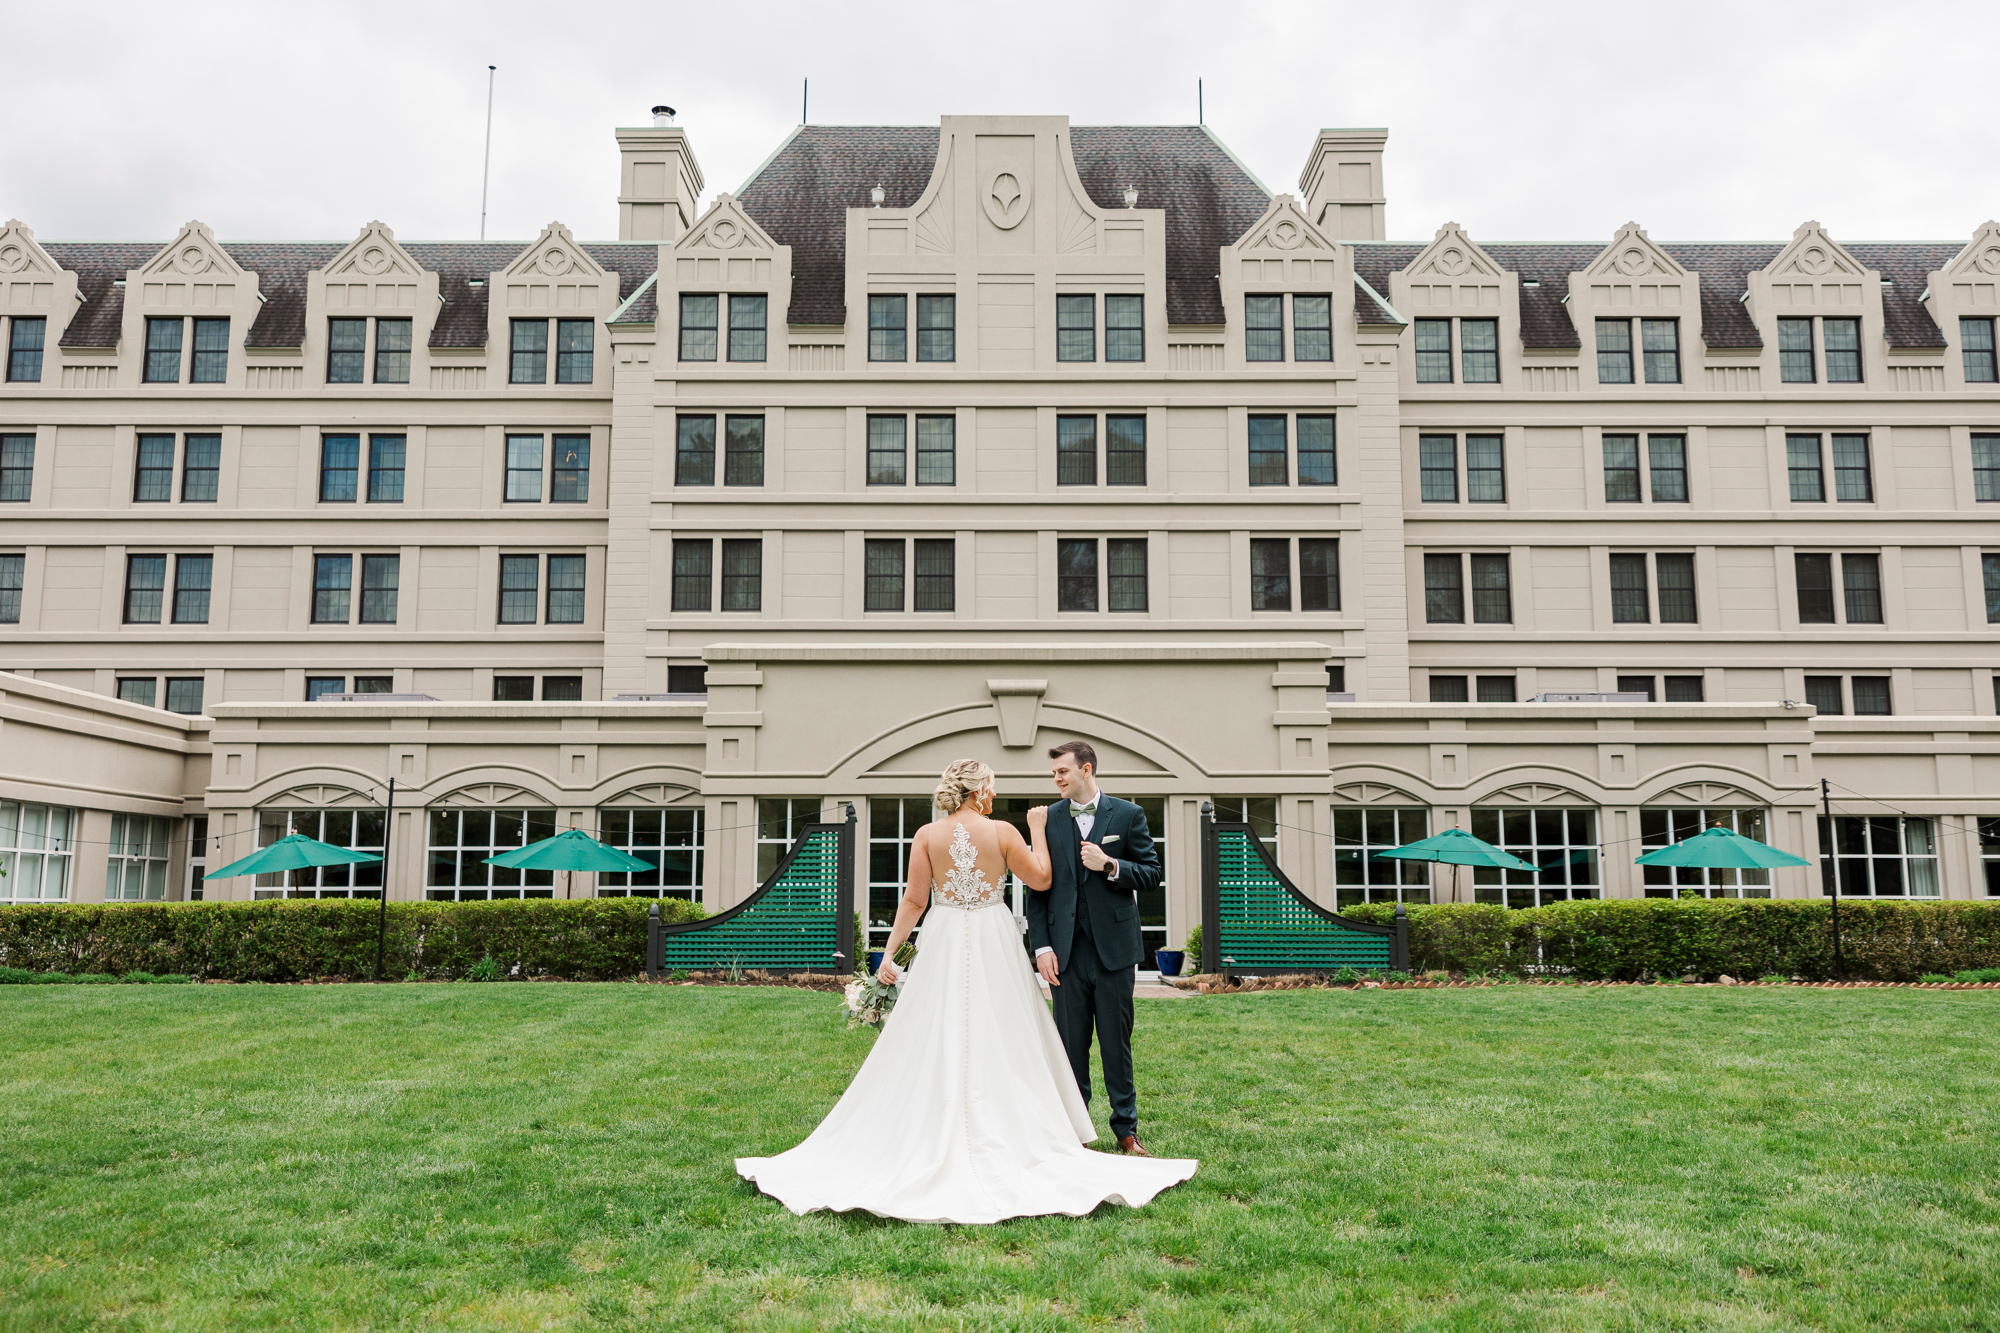 Stunning Hudson Valley hotel wedding venues